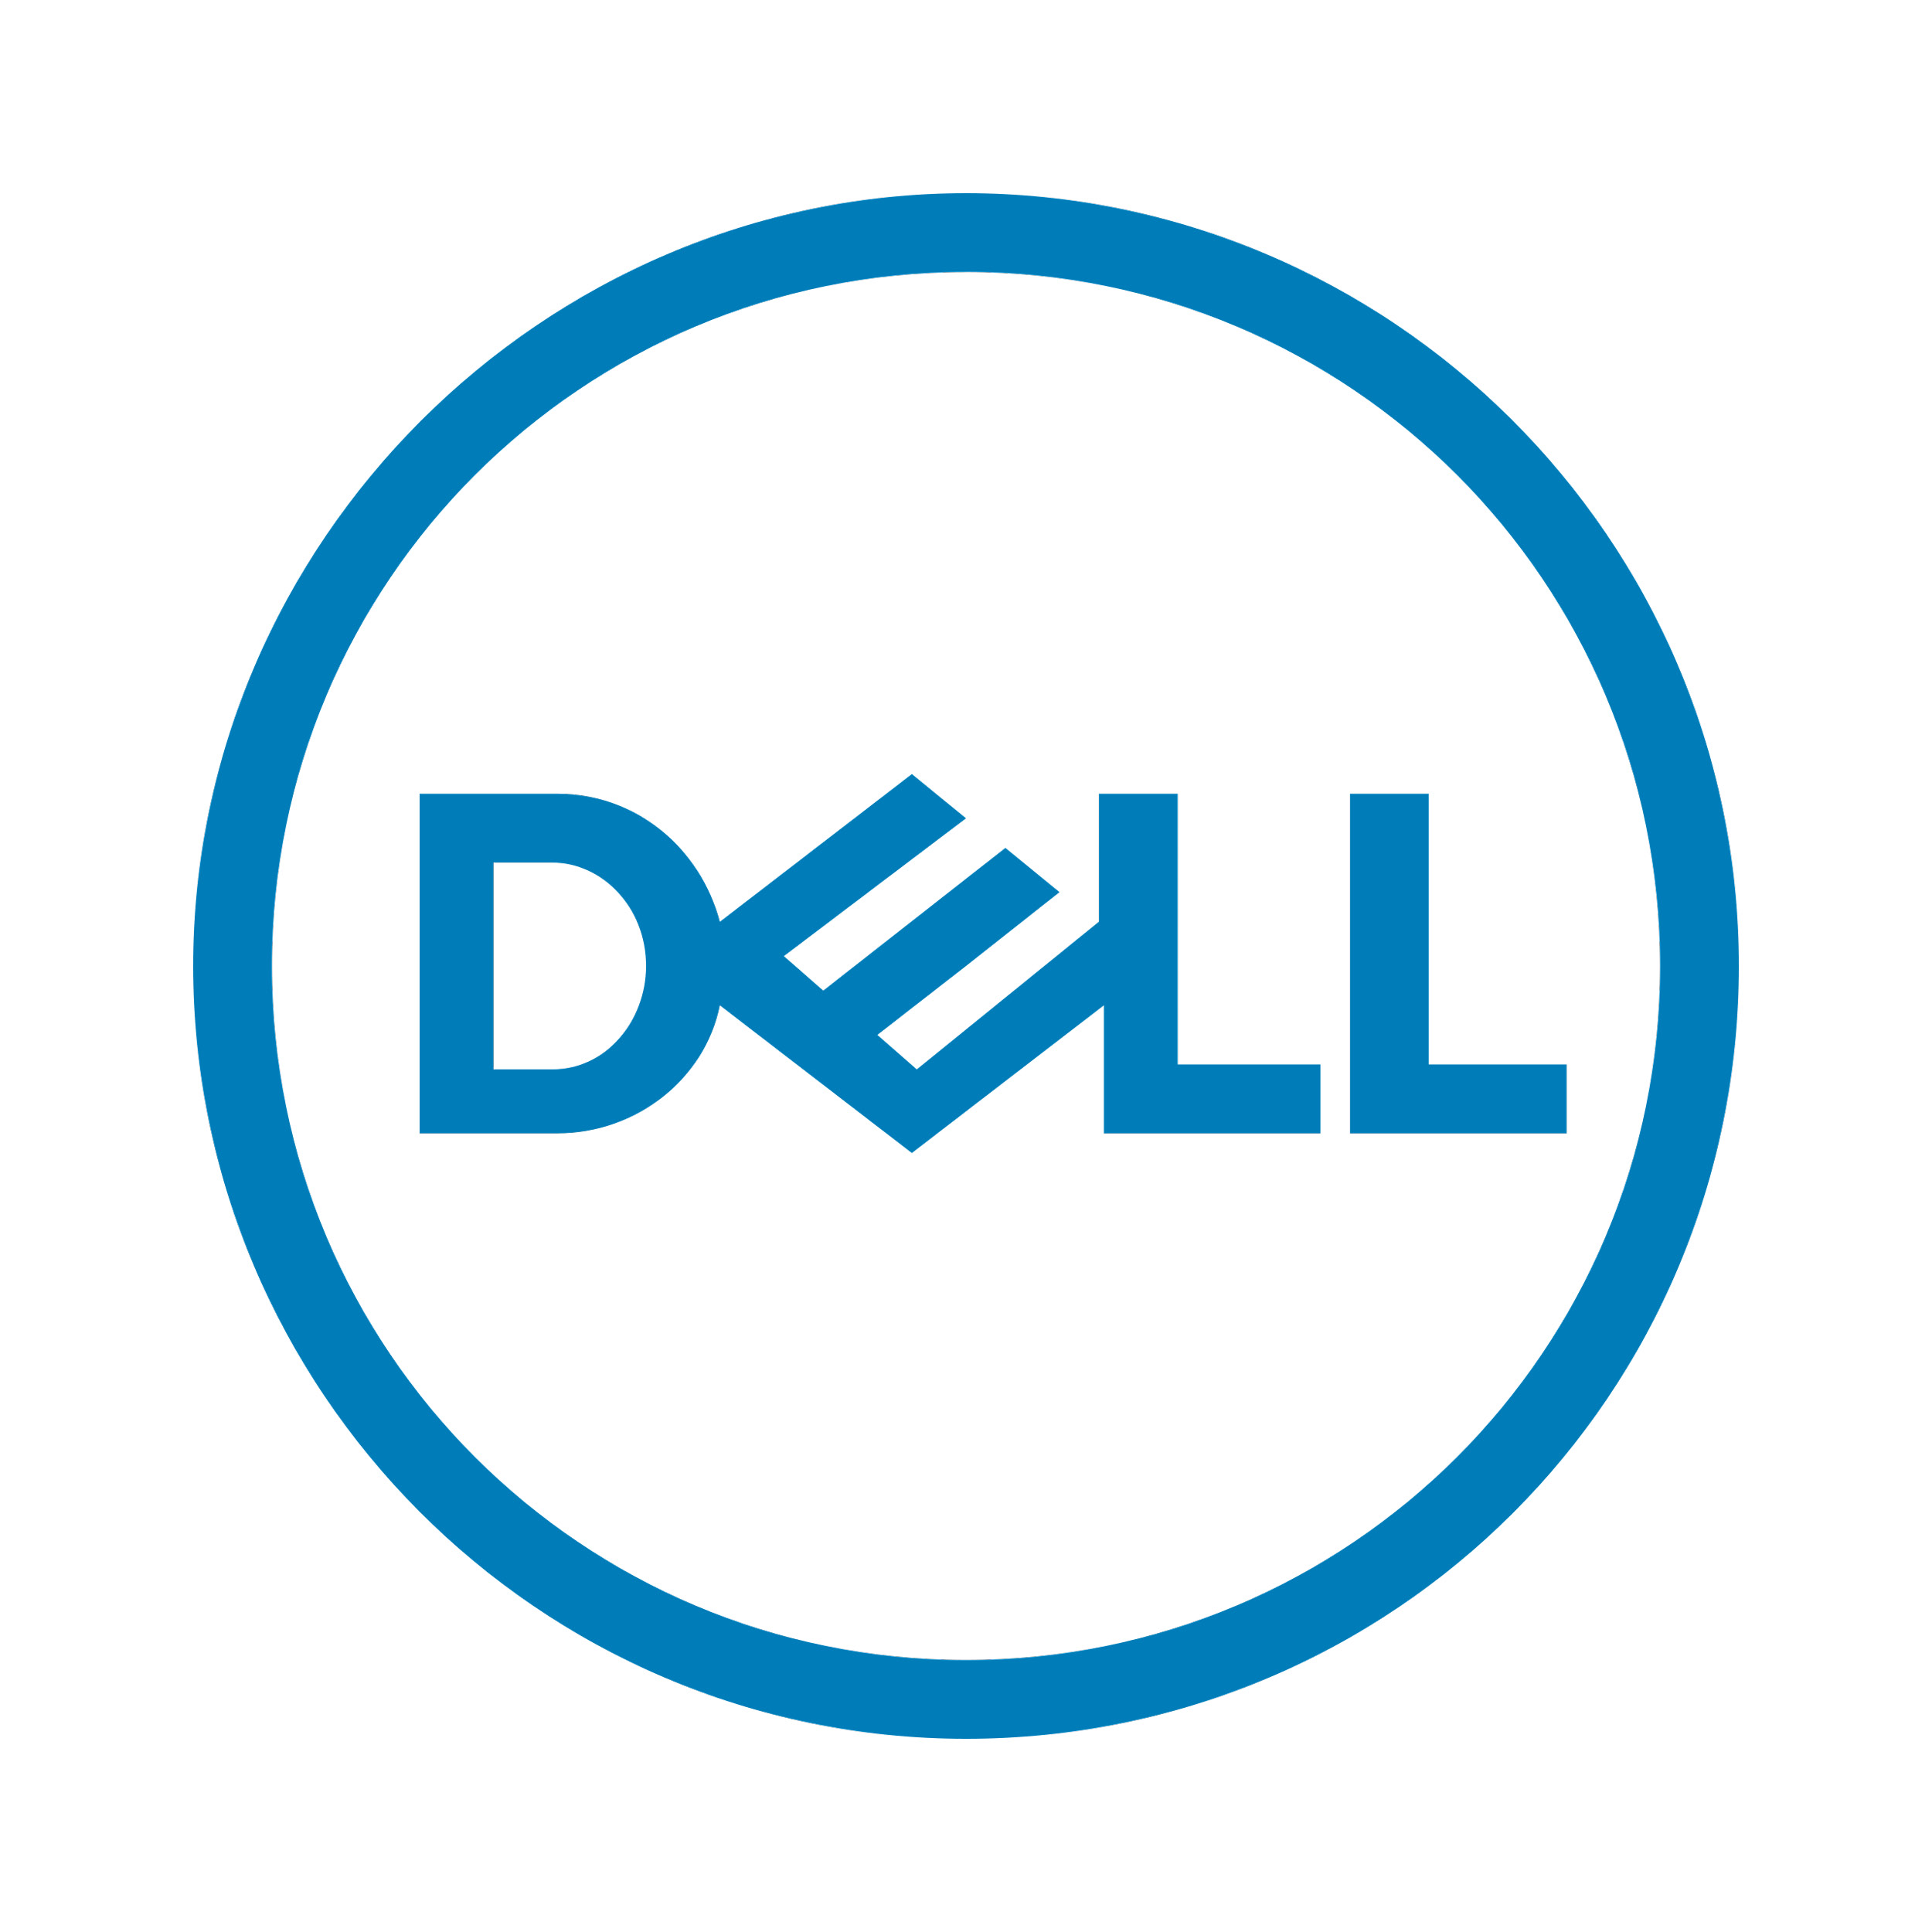 Logo de la marque référence Dell